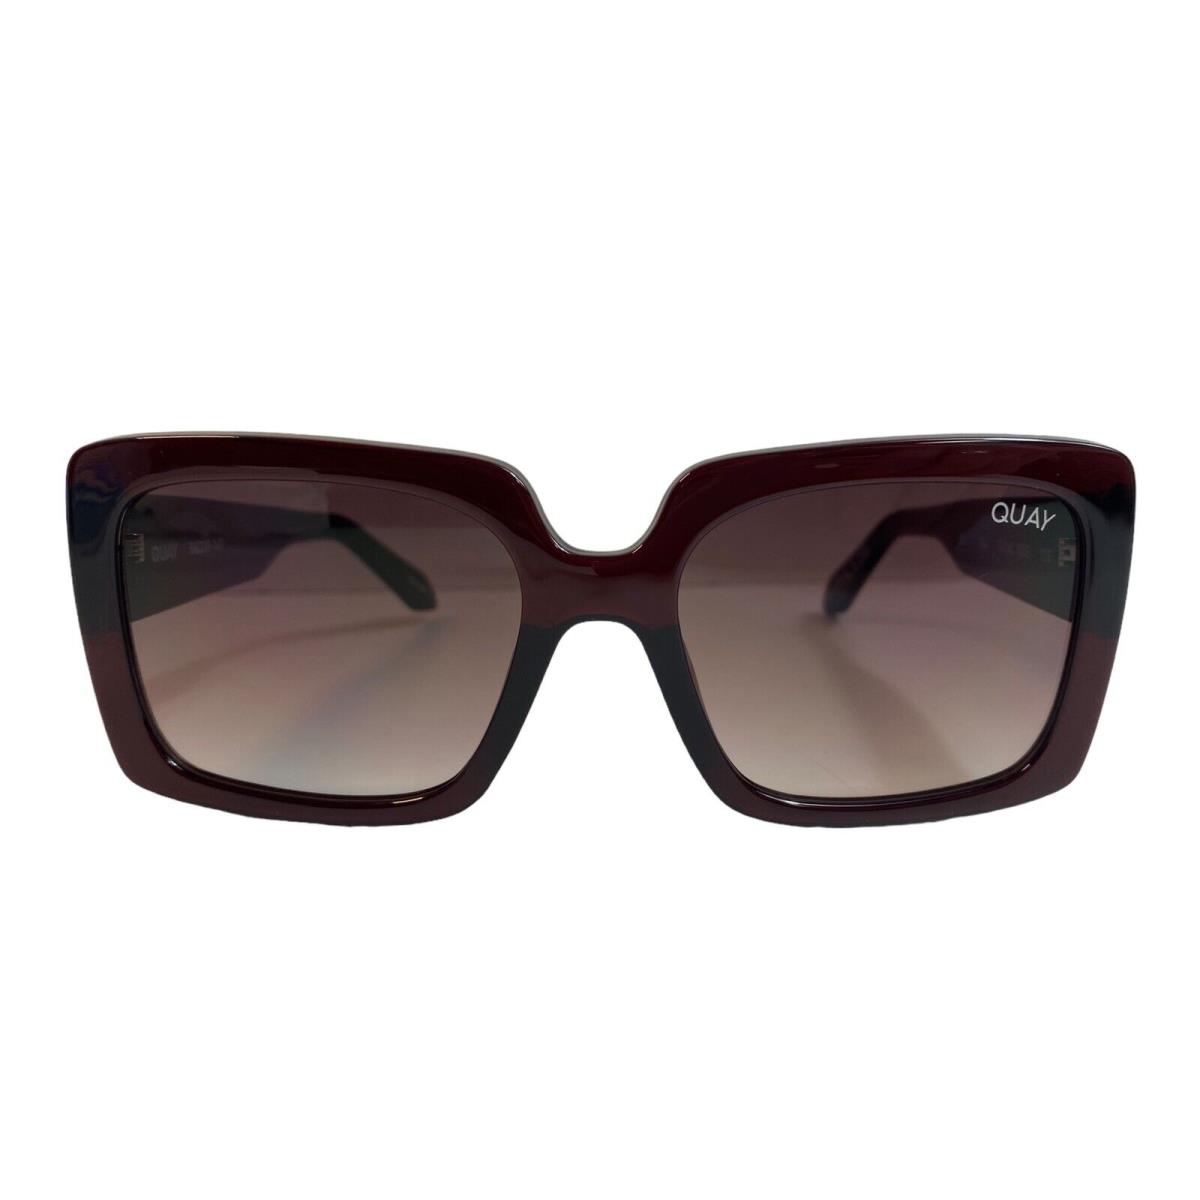 Quay Australia Total Vibe Brown /brown Sunglasses 54mm Rare Color Sunnies Htf